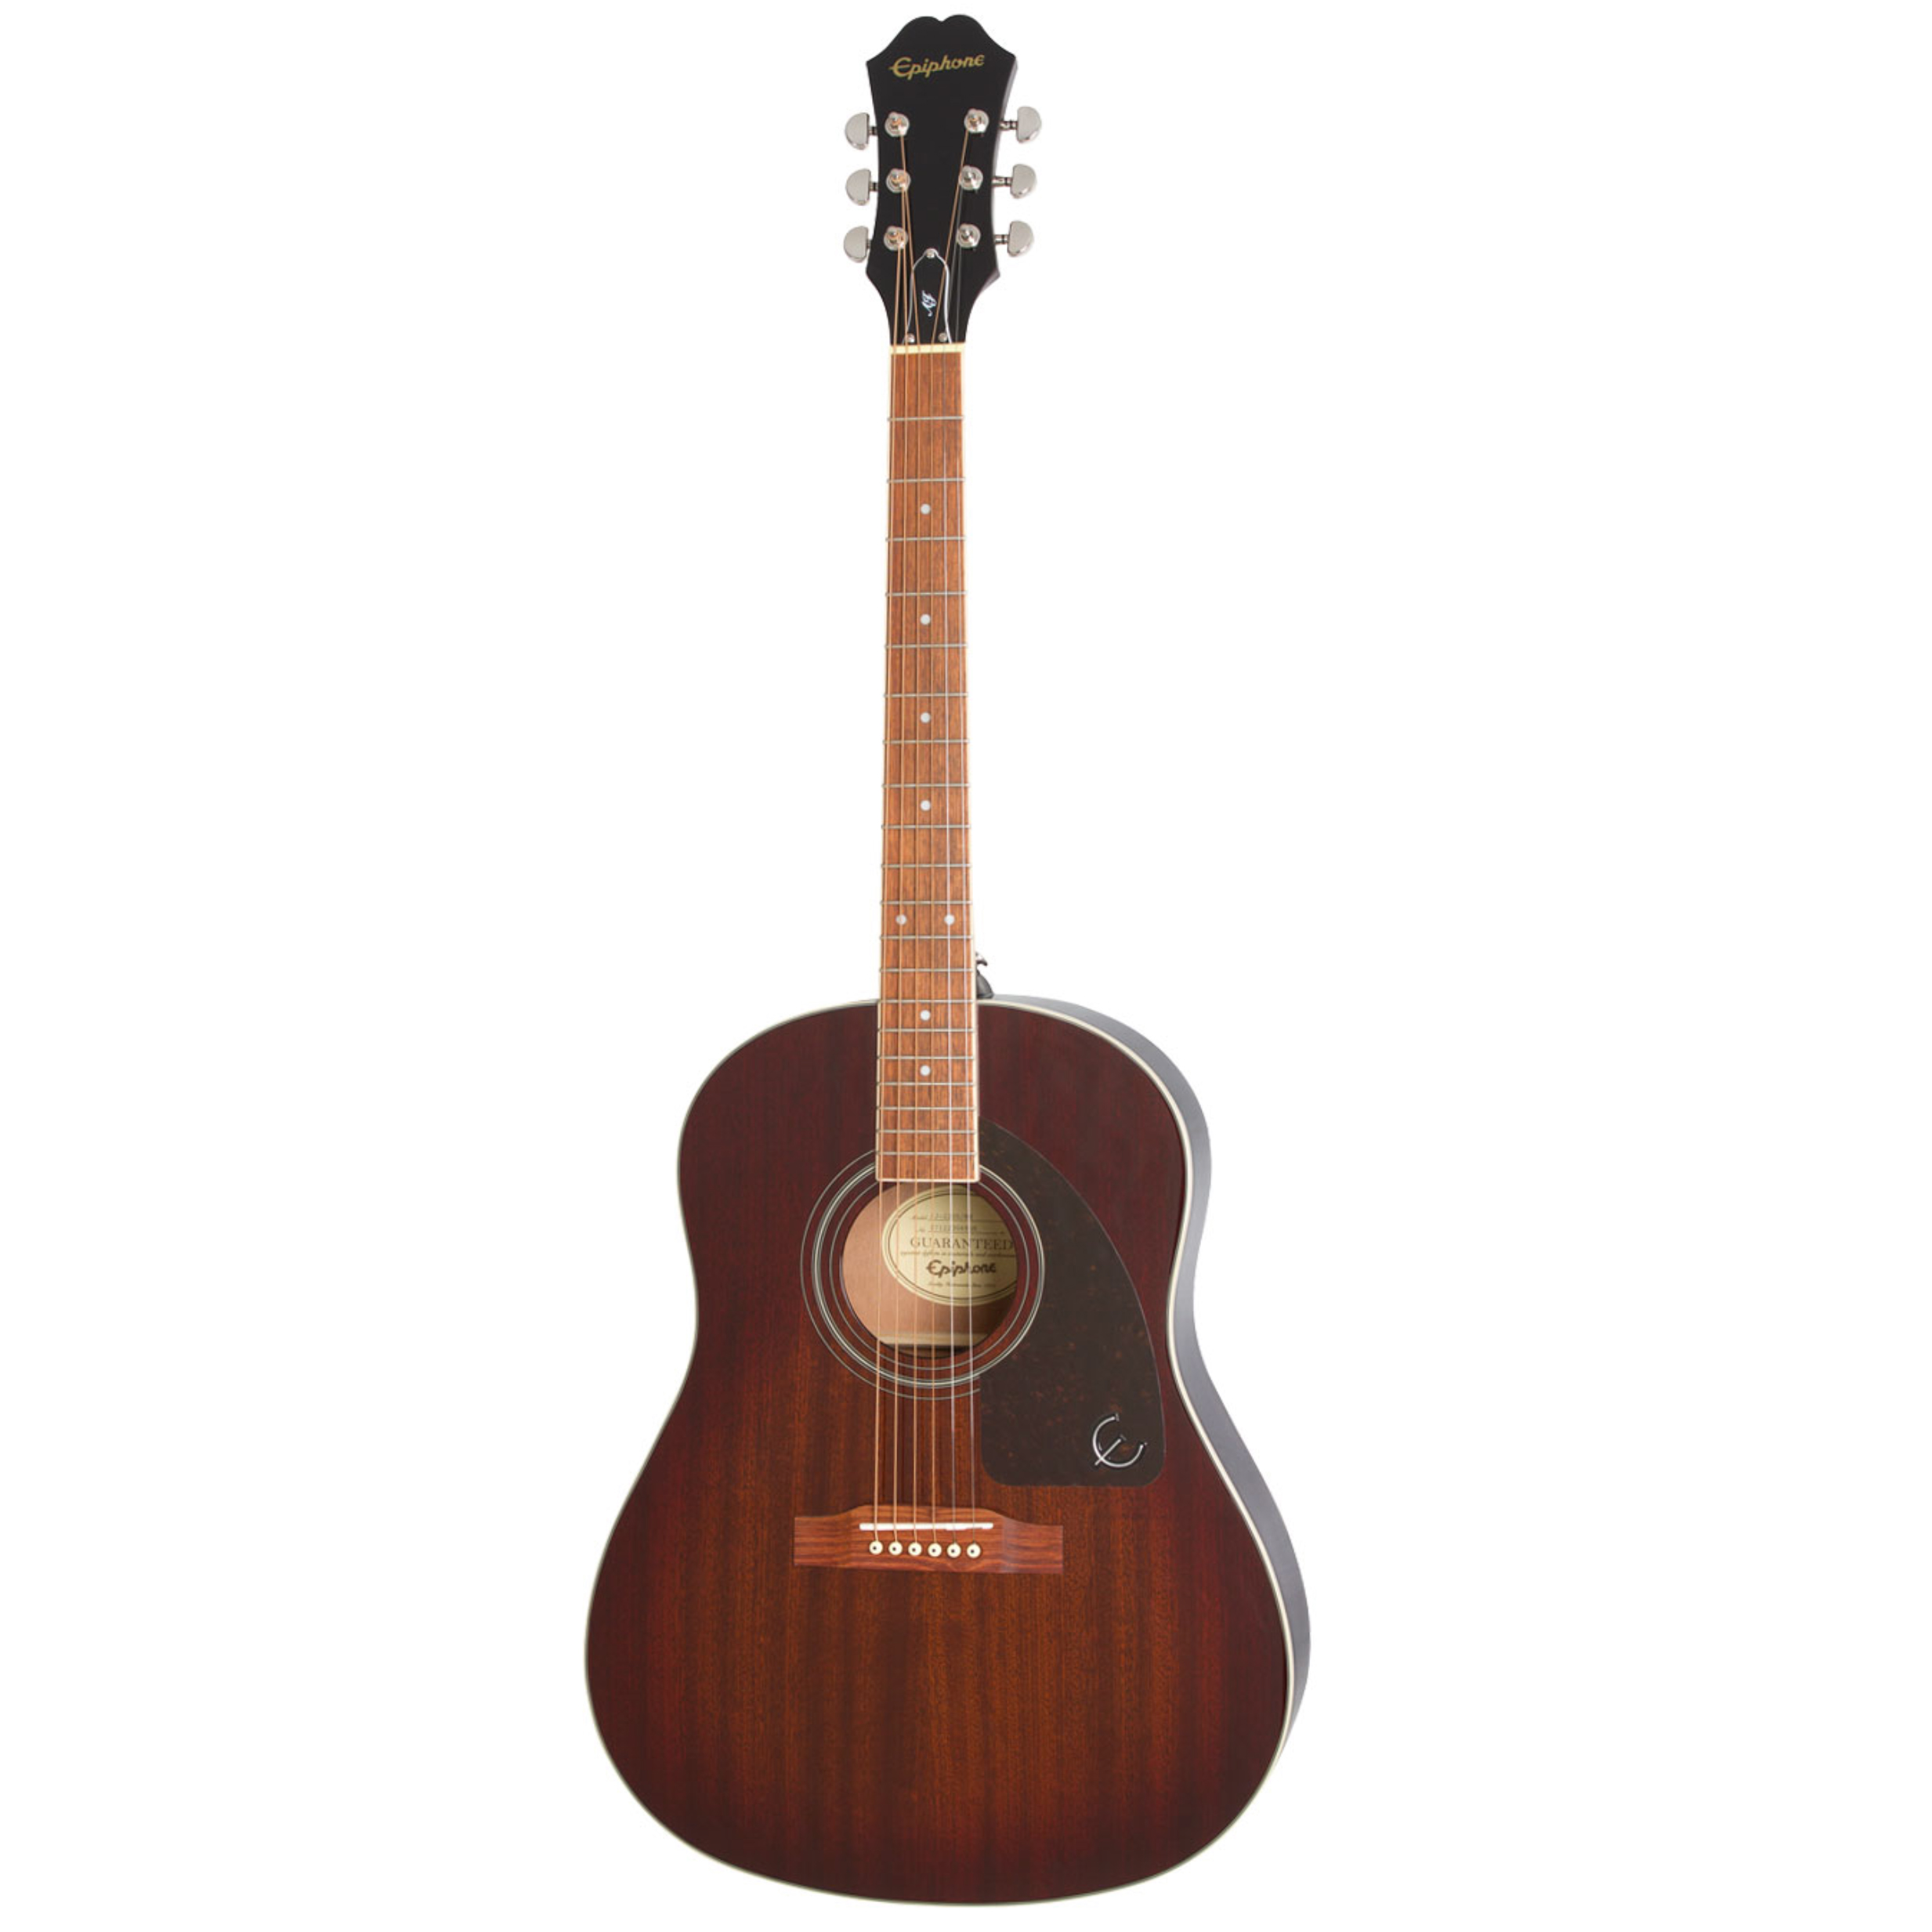 AJ-220S Acoustic guitar